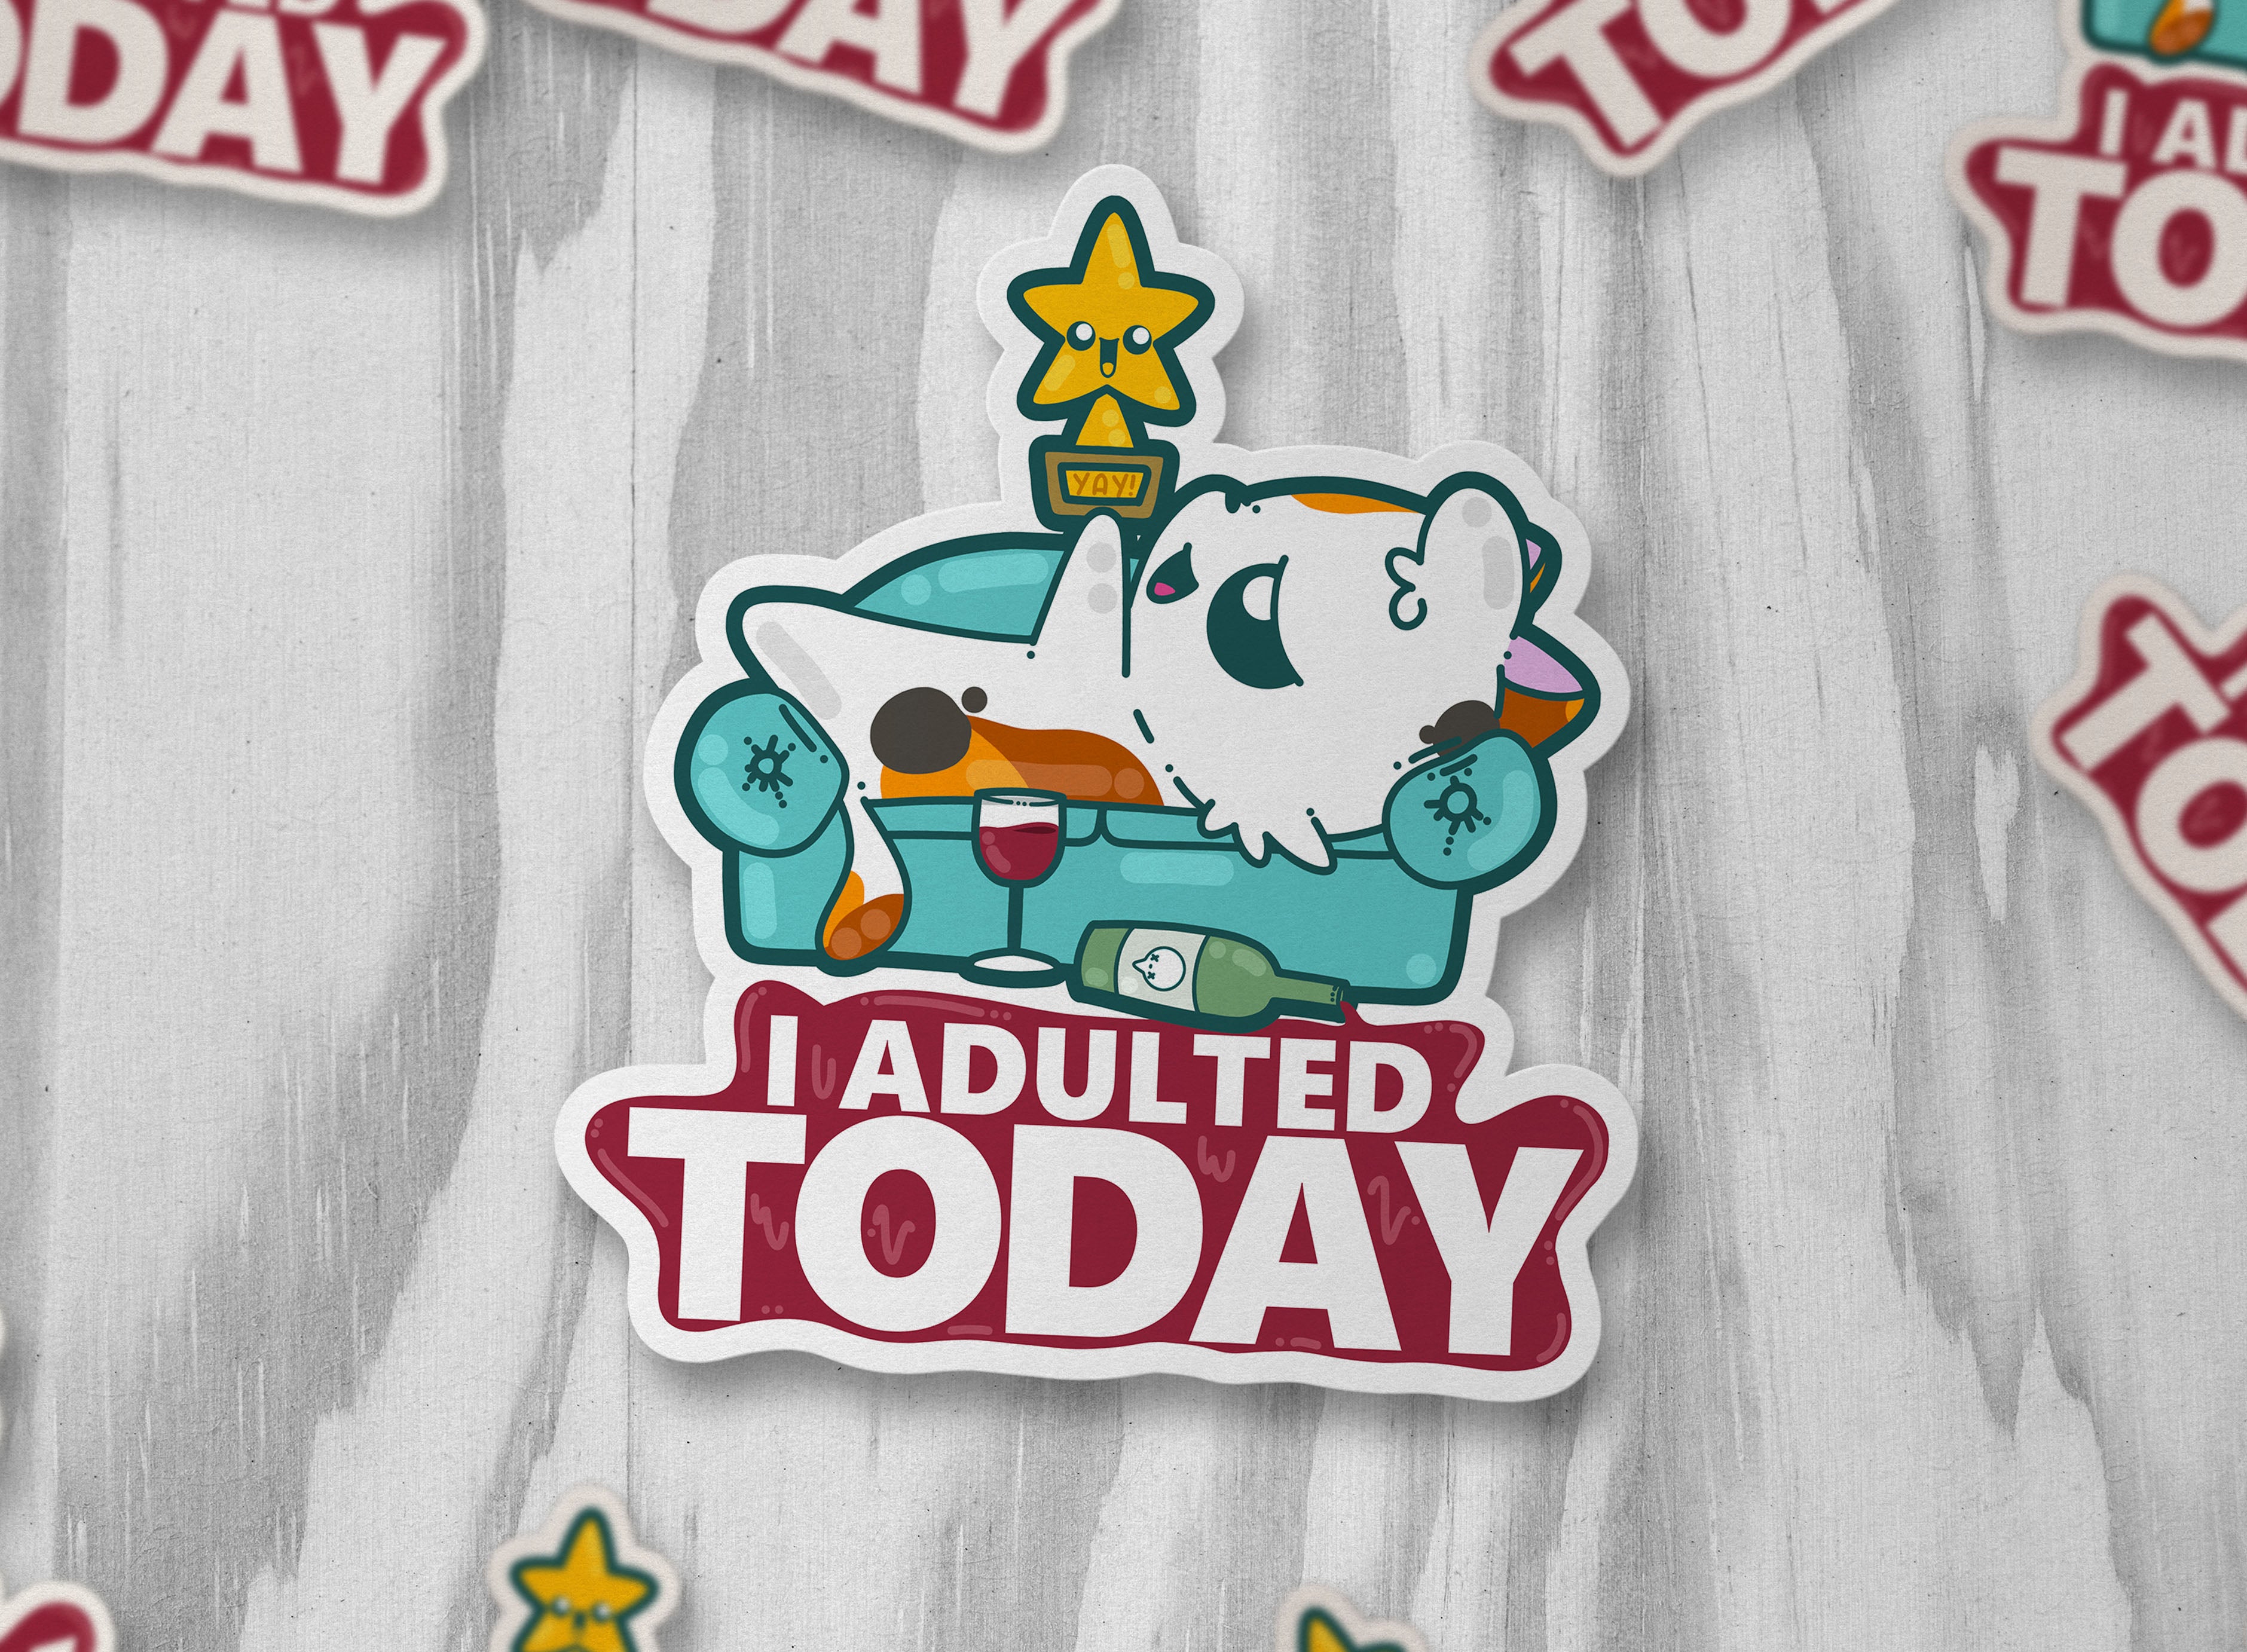 I Adulted Today - ChubbleGumLLC